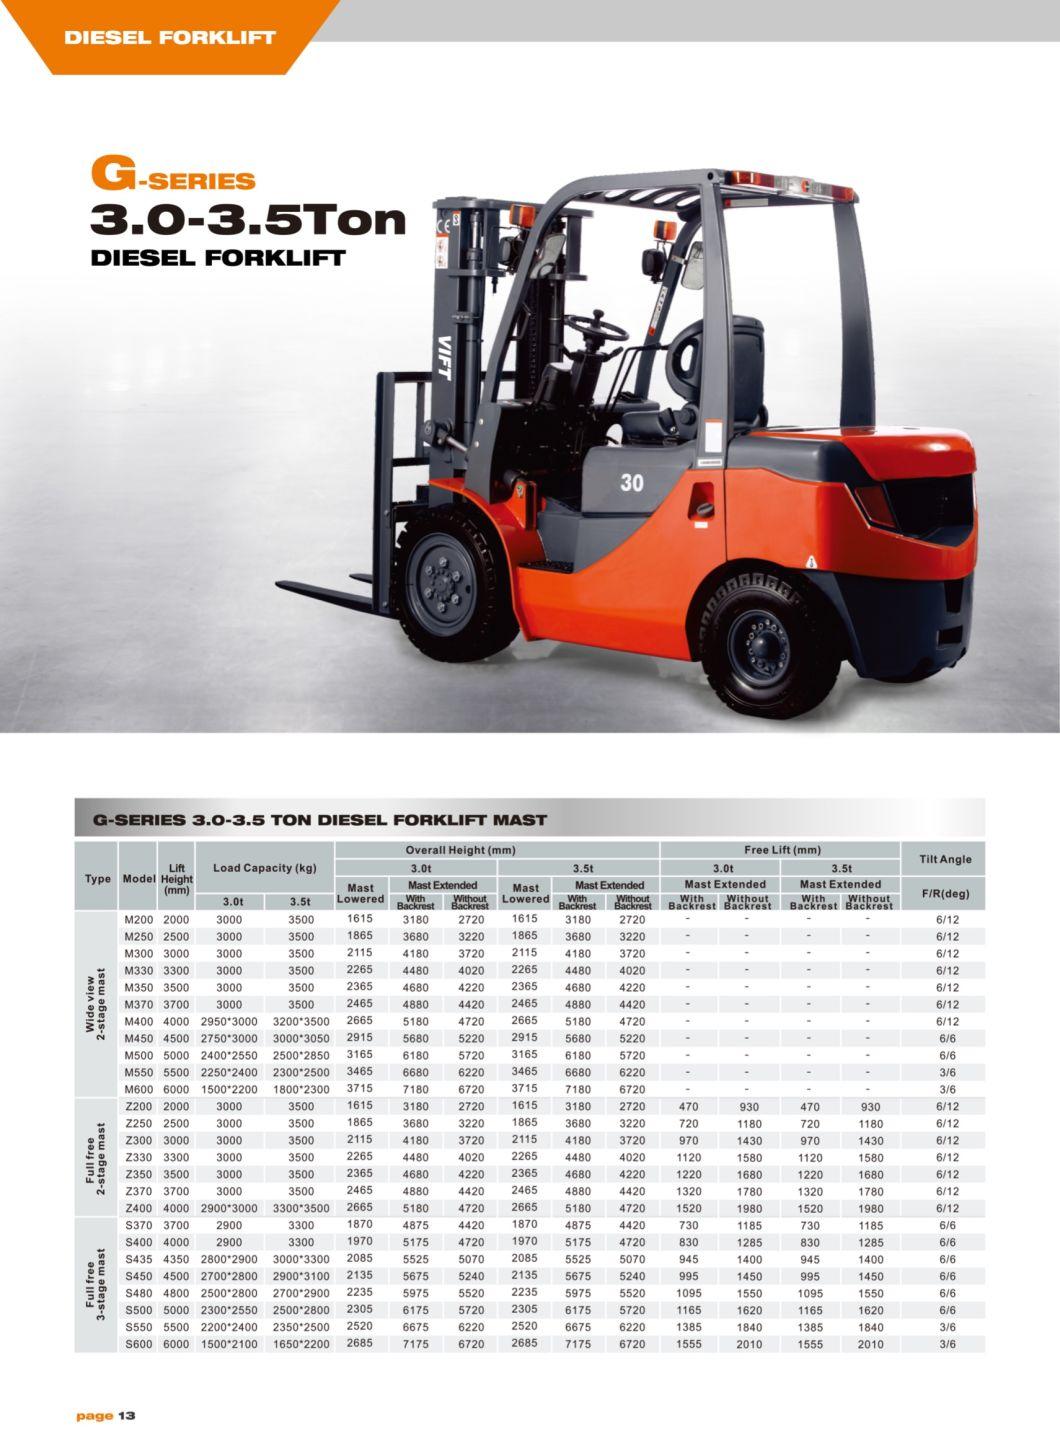 New Forklift Price for Europe Diesel Forklift 2ton Forklift for Sale